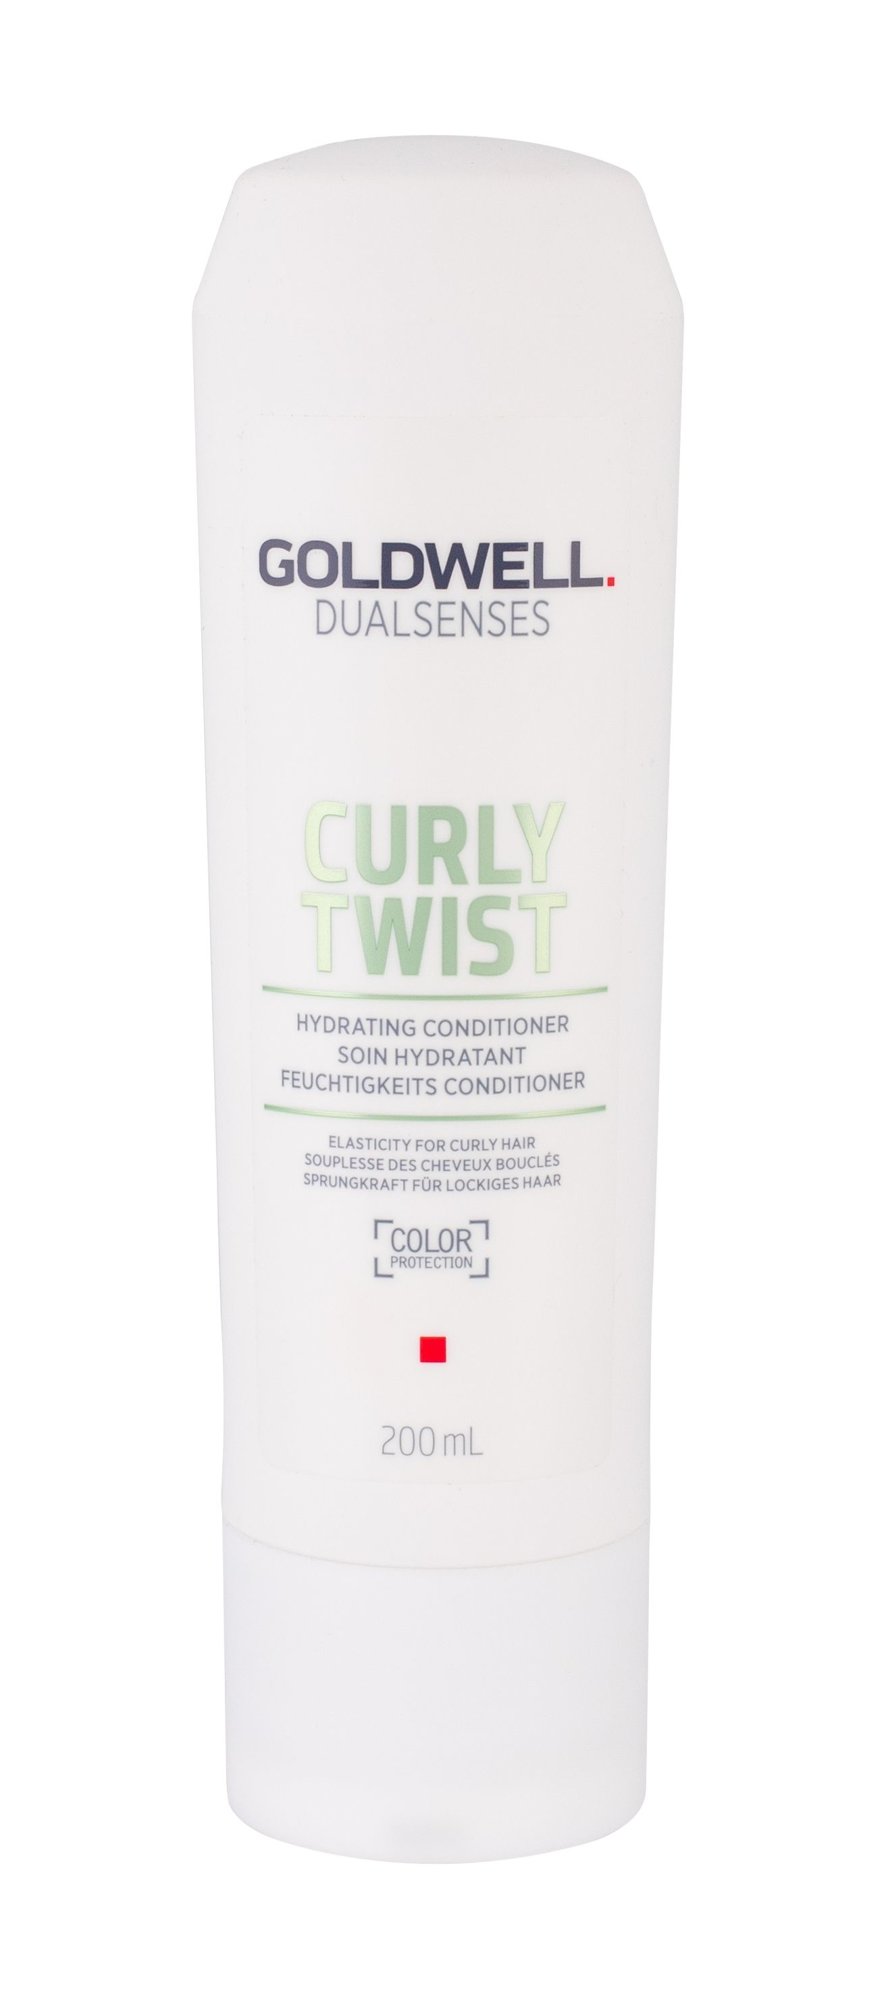 Goldwell Dualsenses Curly Twist 200ml kondicionierius